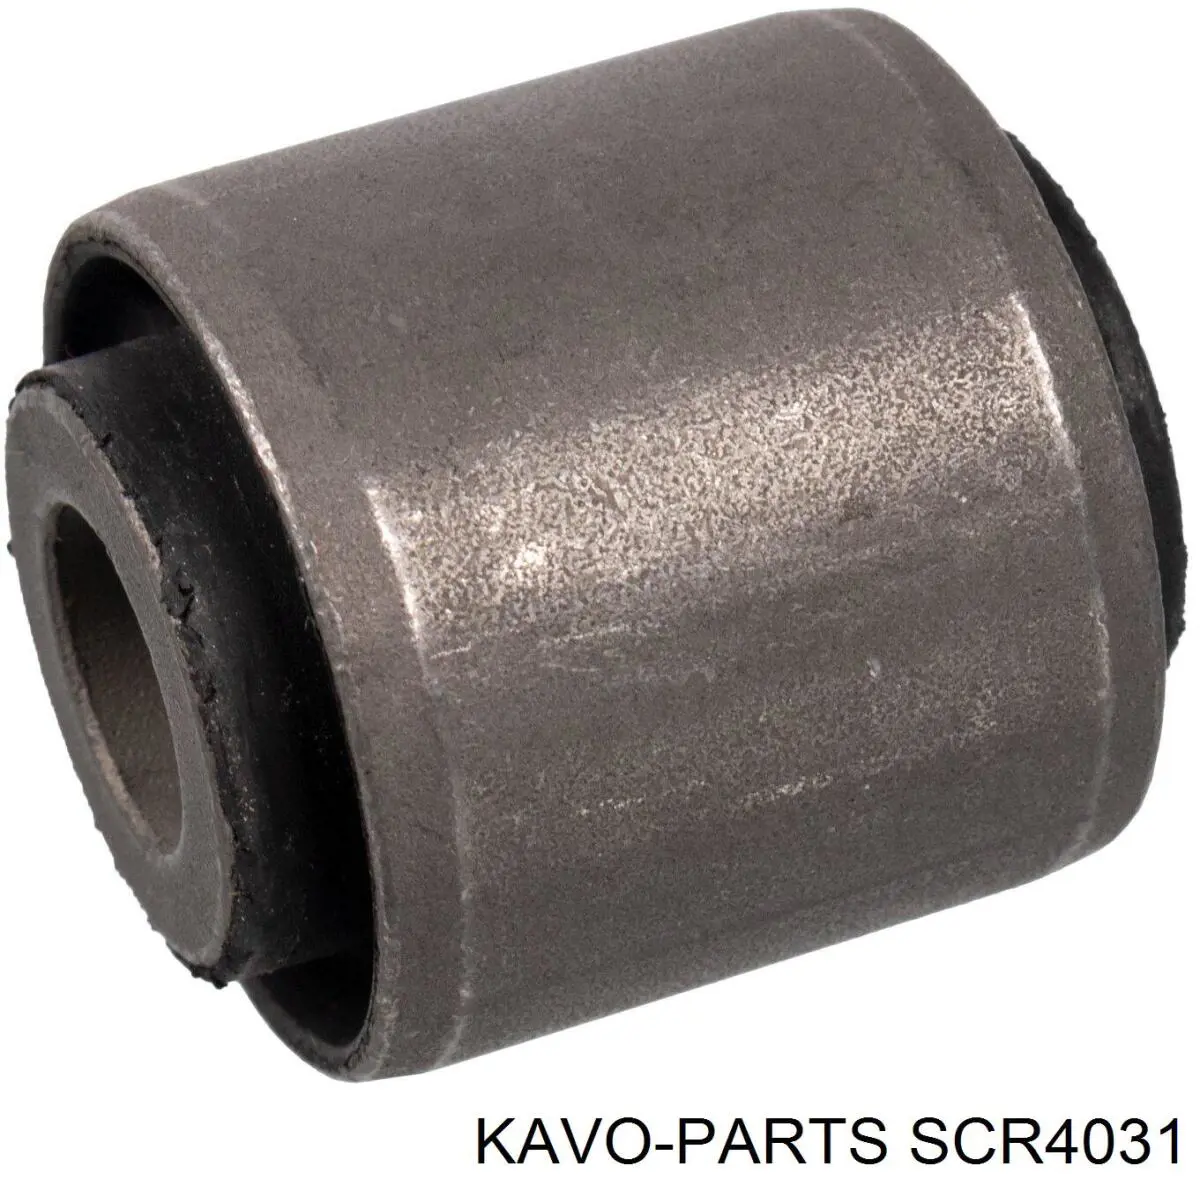 SCR-4031 Kavo Parts suspensión, barra transversal trasera, interior